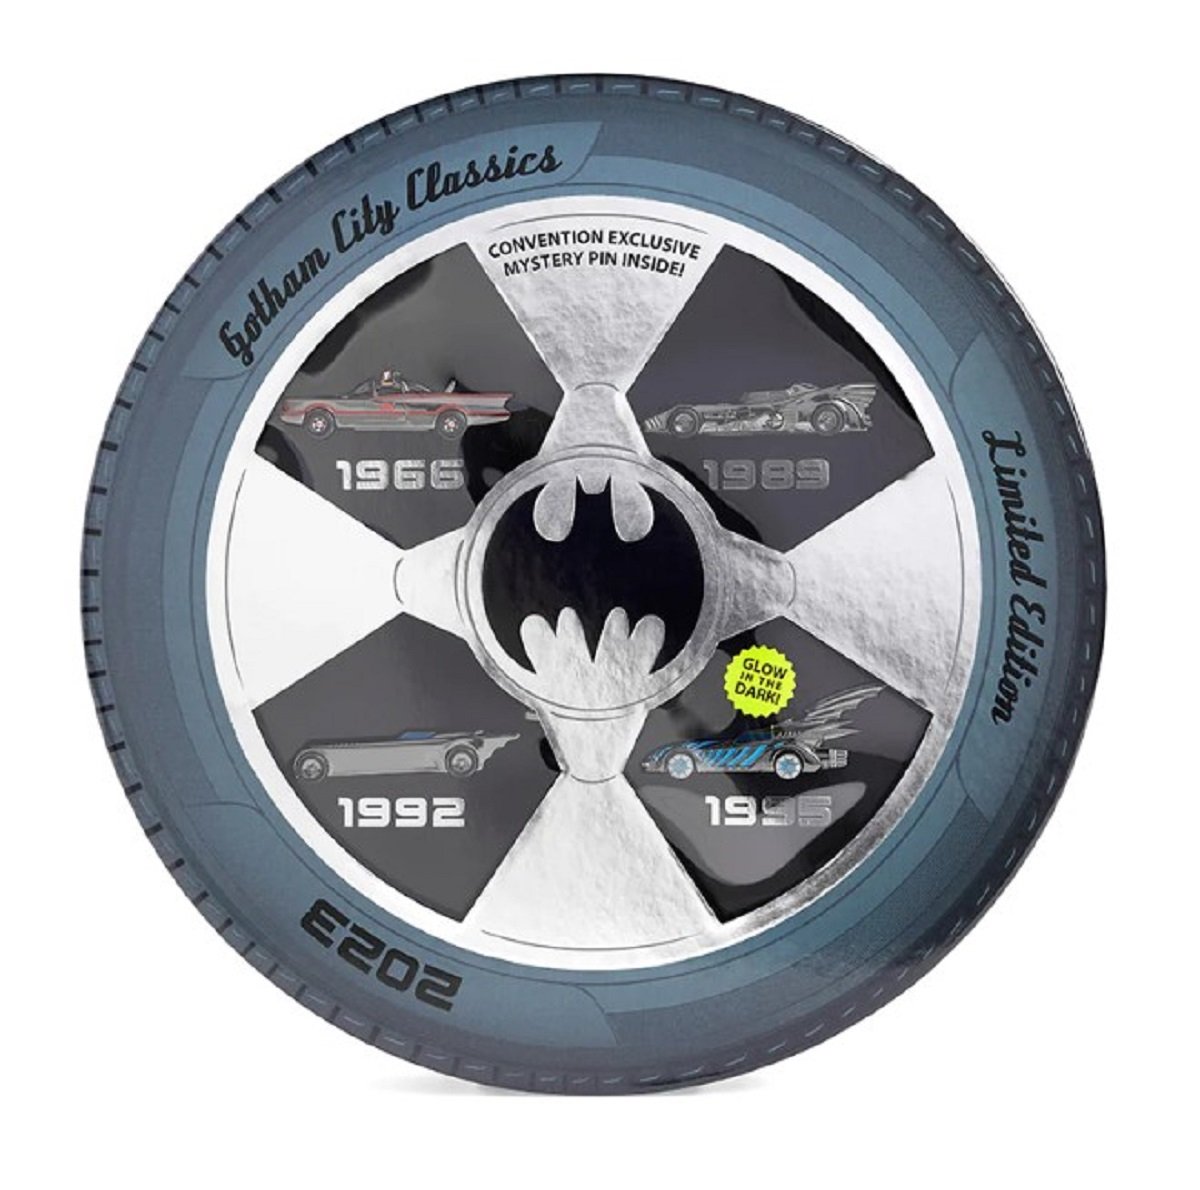 Batman Gotham City Classics Batmobile Exclusive Limited Edition Pin Set front packaging.